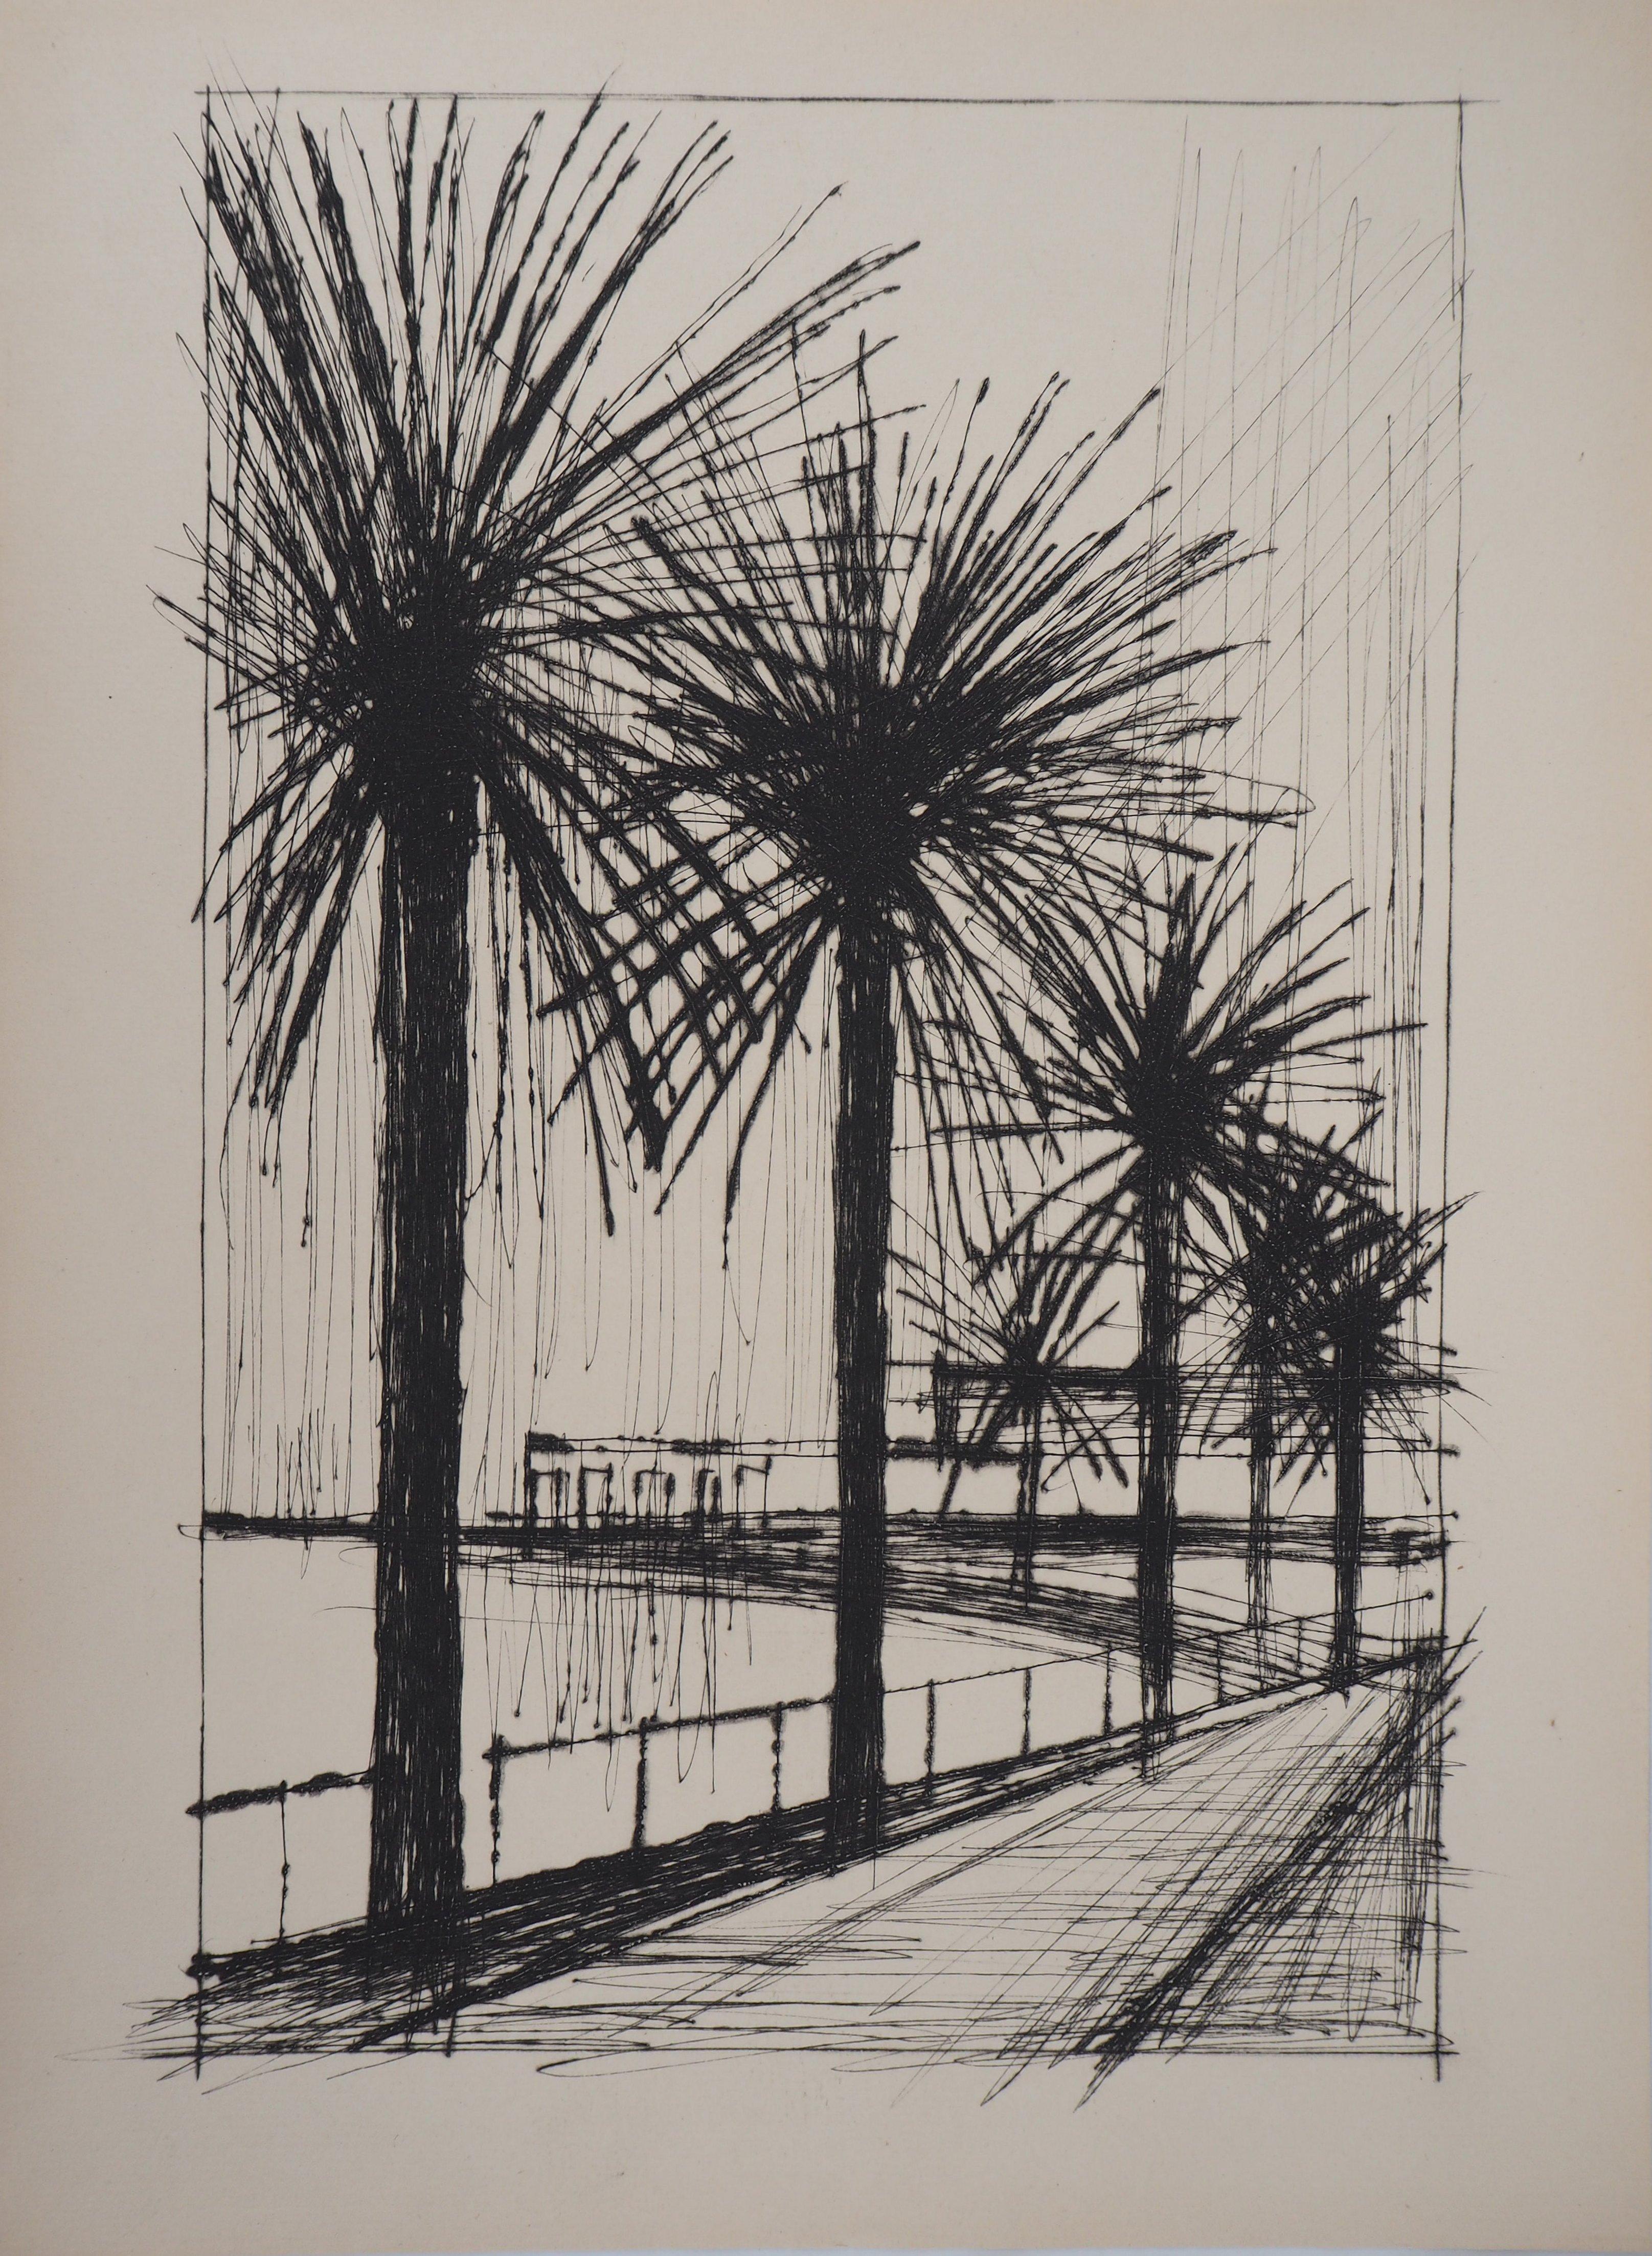  Italy : The Palms Of Naples - Original etching, 1959 (Reims #340) - Print by Bernard Buffet